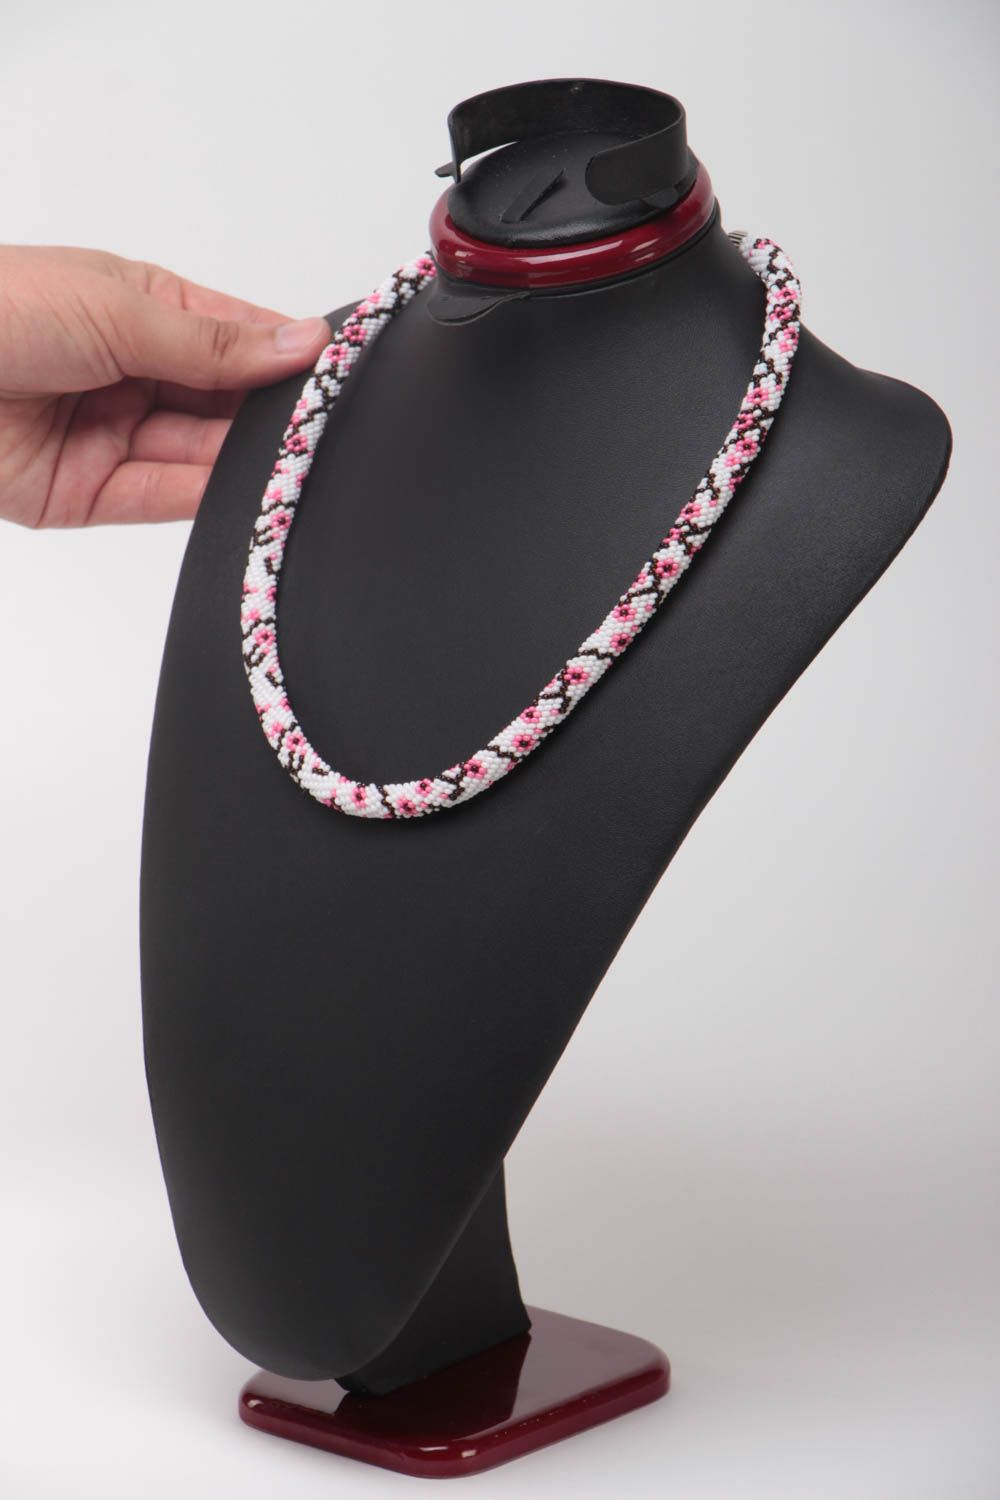 Unusual handmade beaded cord necklace designer fashion jewelry gift ideas photo 5